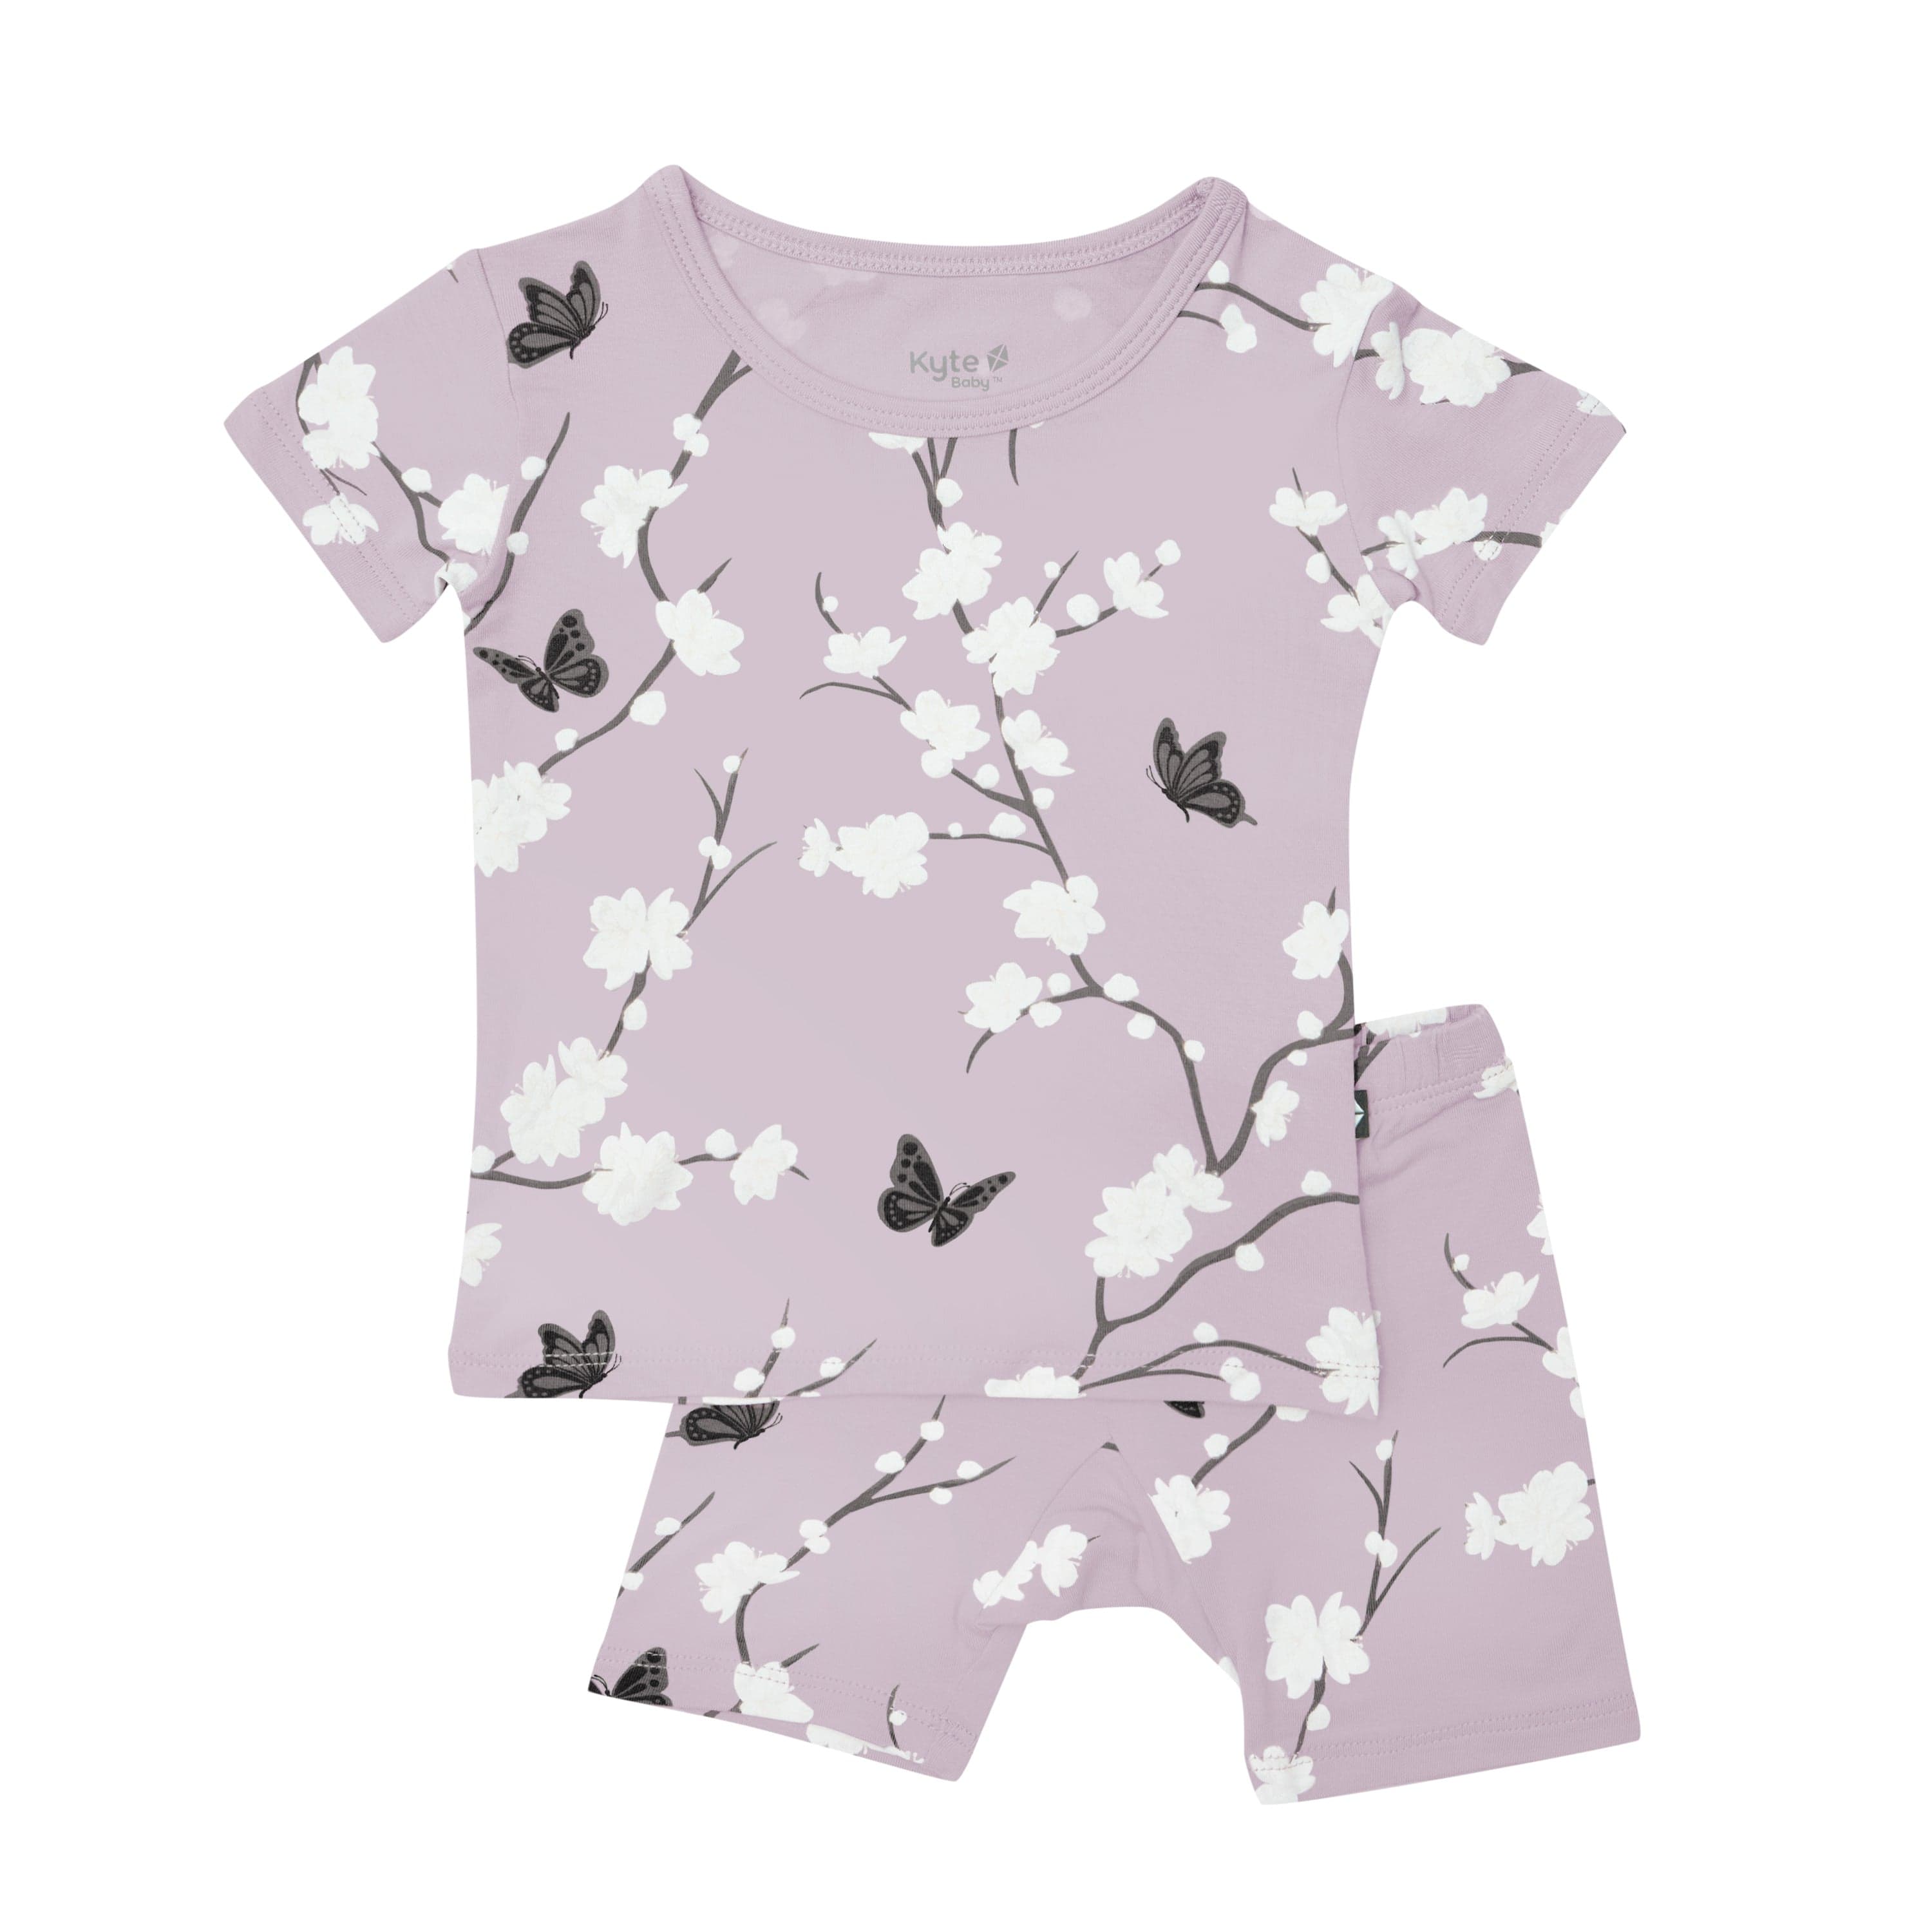 Kyte Baby Short Sleeve Toddler Pajama Set Short Sleeve Pajamas in Cherry Blossom